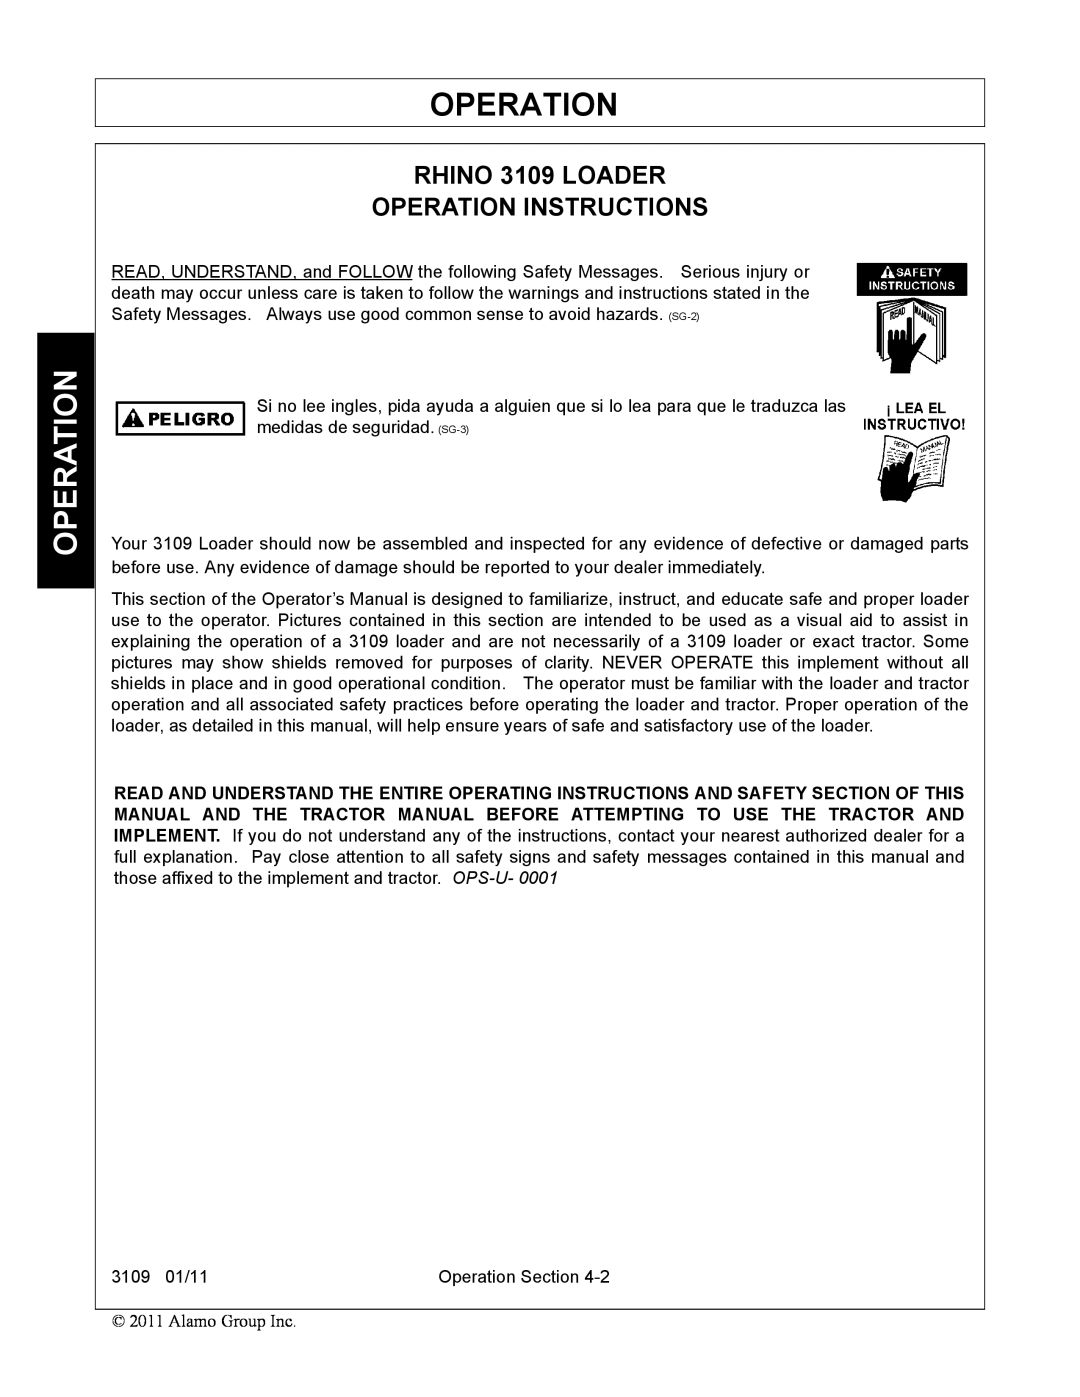 Alamo manual Operation, RHINO 3109 LOADER OPERATION INSTRUCTIONS 